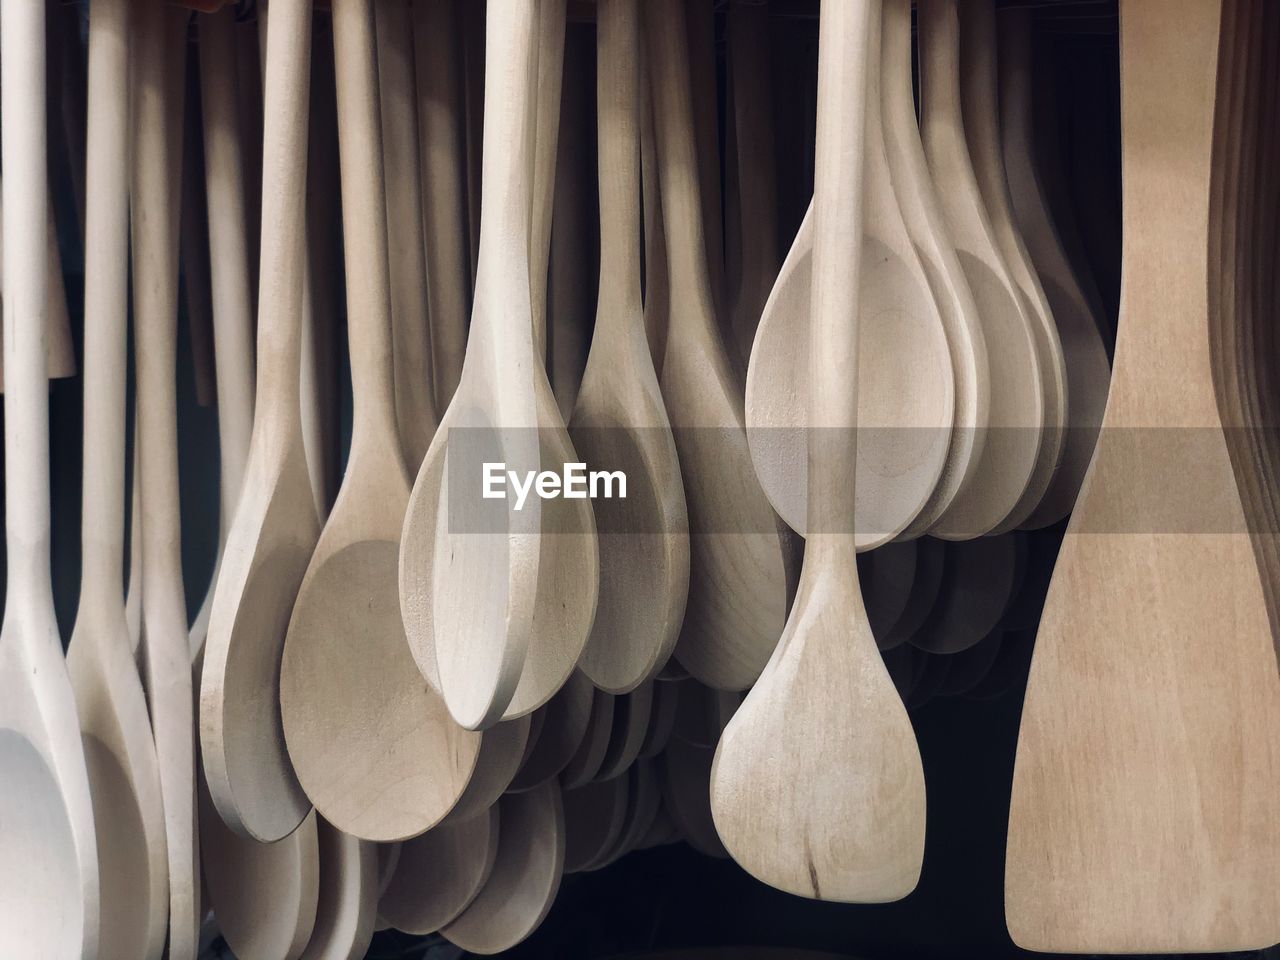 Wooden kitchen utensils wooden spoon for cooking in kitchen